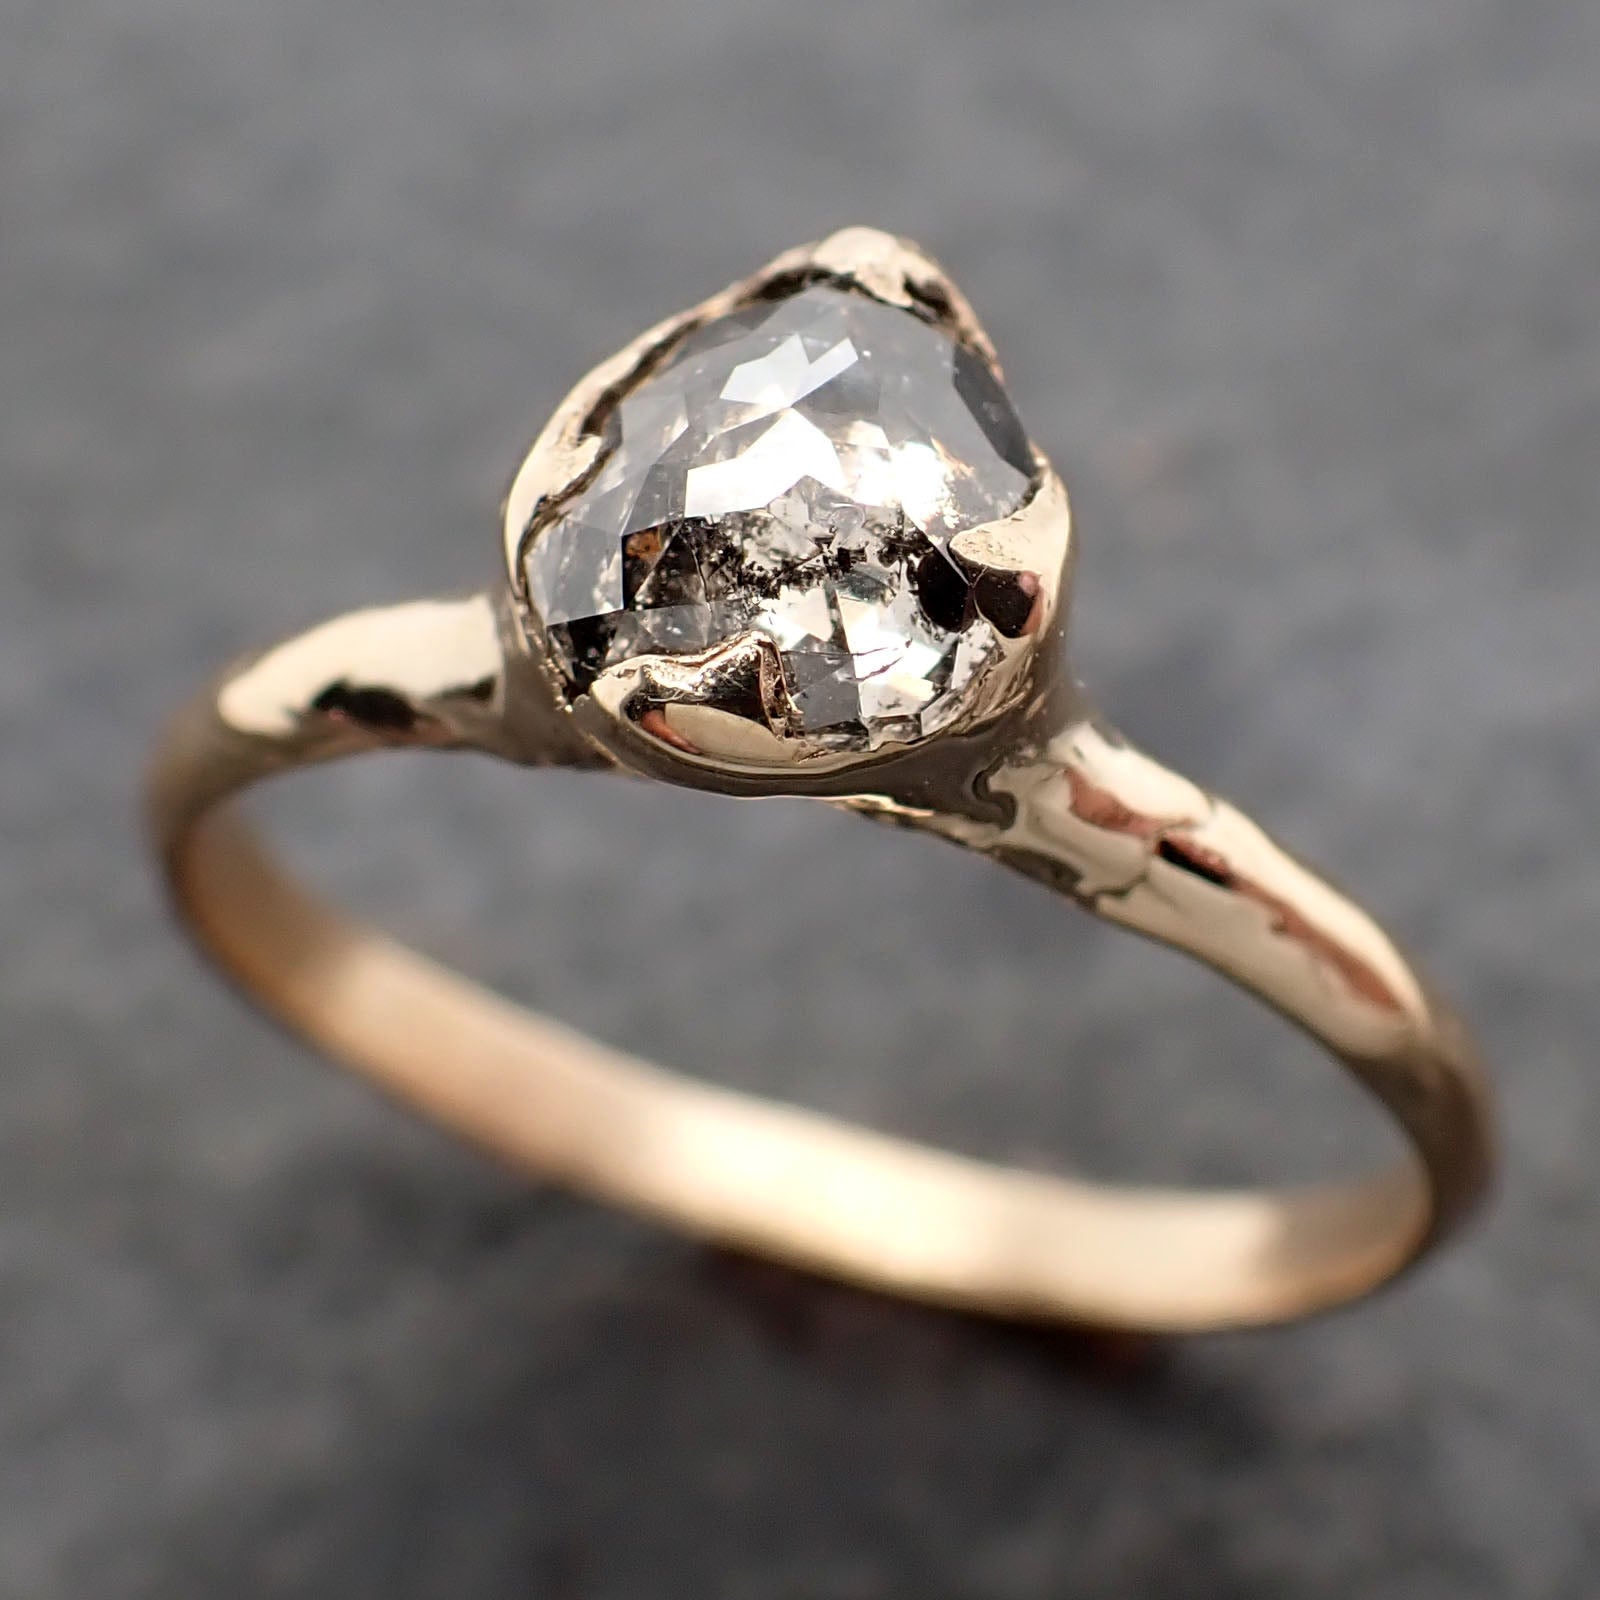 fancy cut salt and pepper diamond solitaire engagement 14k yellow gold wedding ring diamond ring byangeline 2610 Alternative Engagement